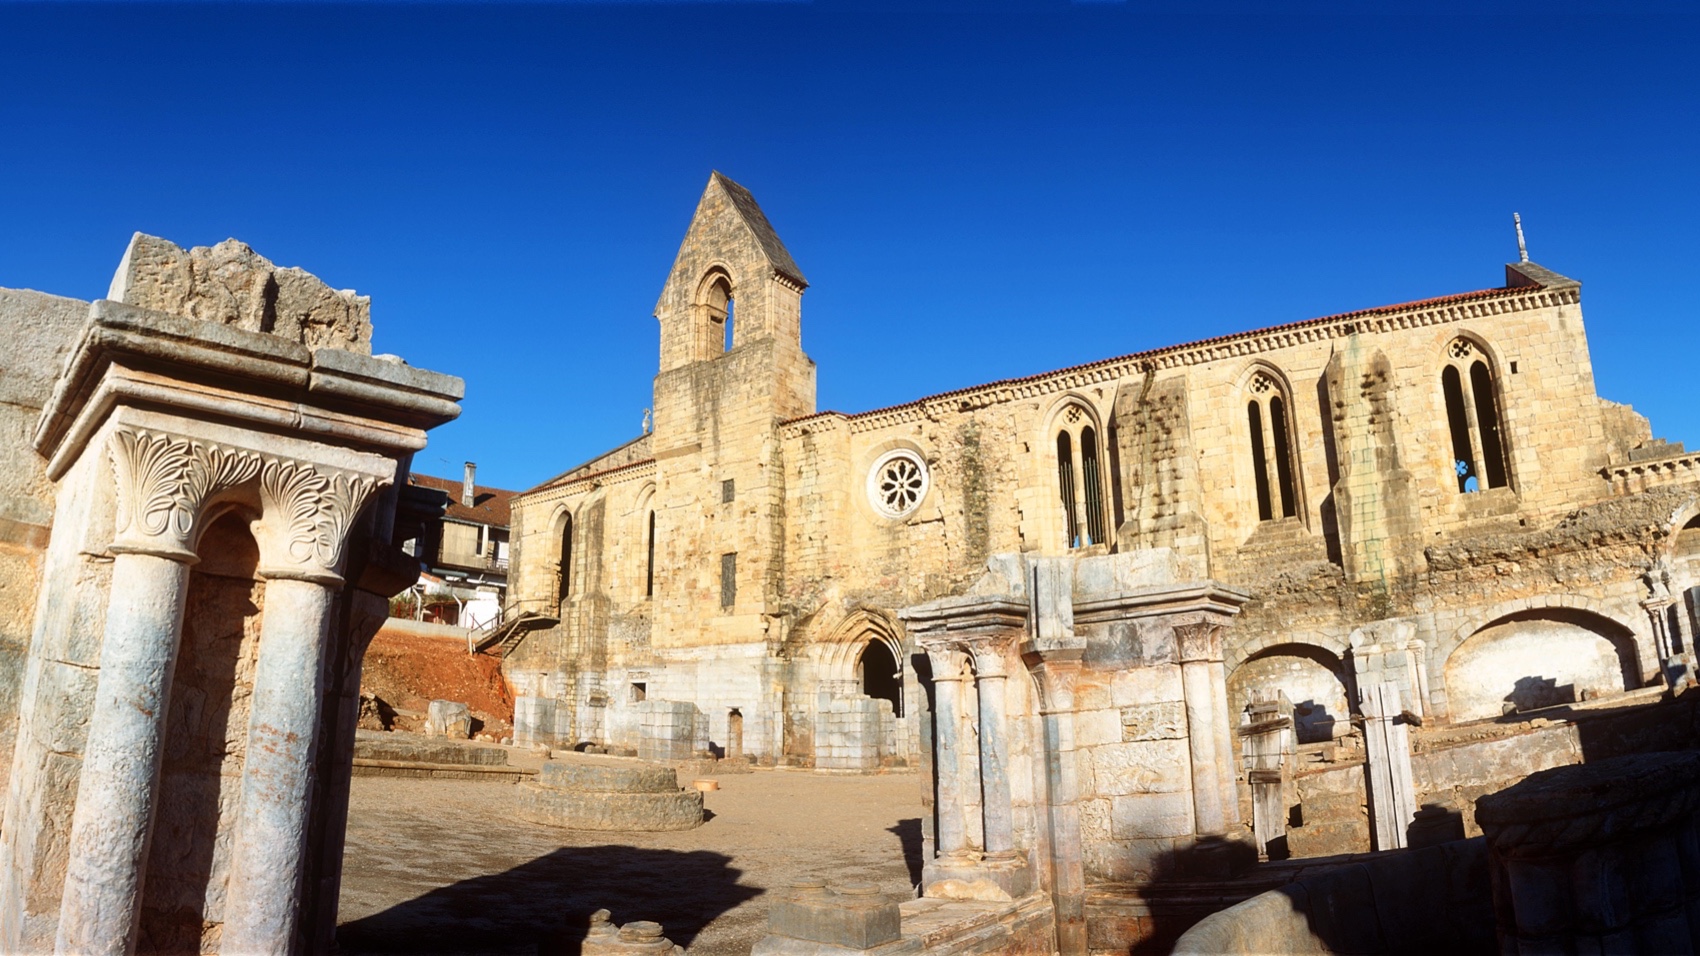 Turismo Centro de Portugal - Coimbra Historical City Tour monastery outside